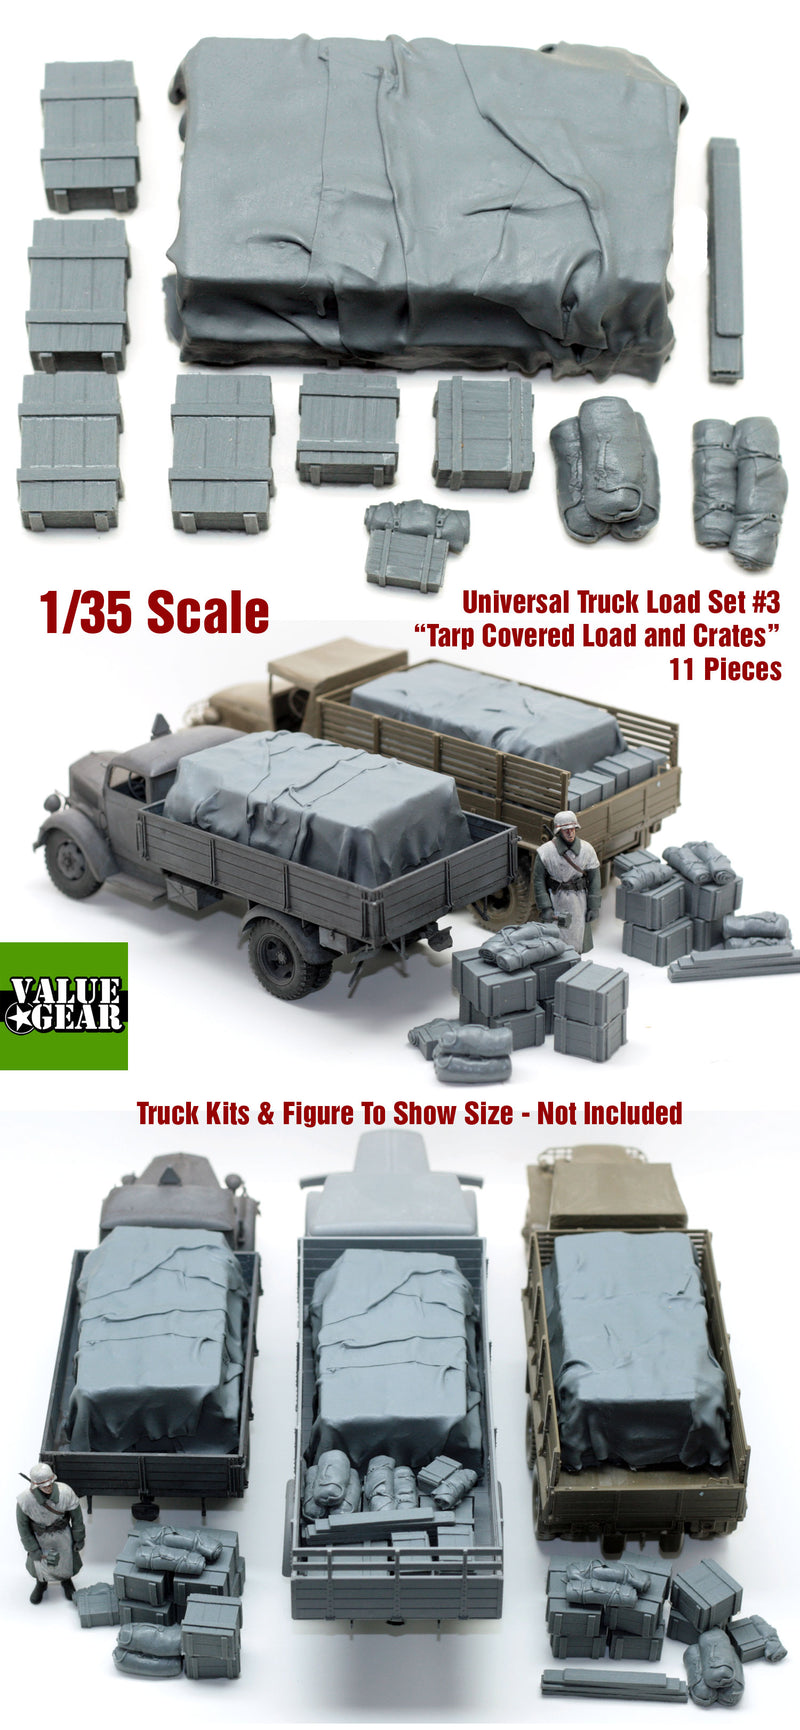 Value Gear GUT03 1/35 Universal Truck Load Set